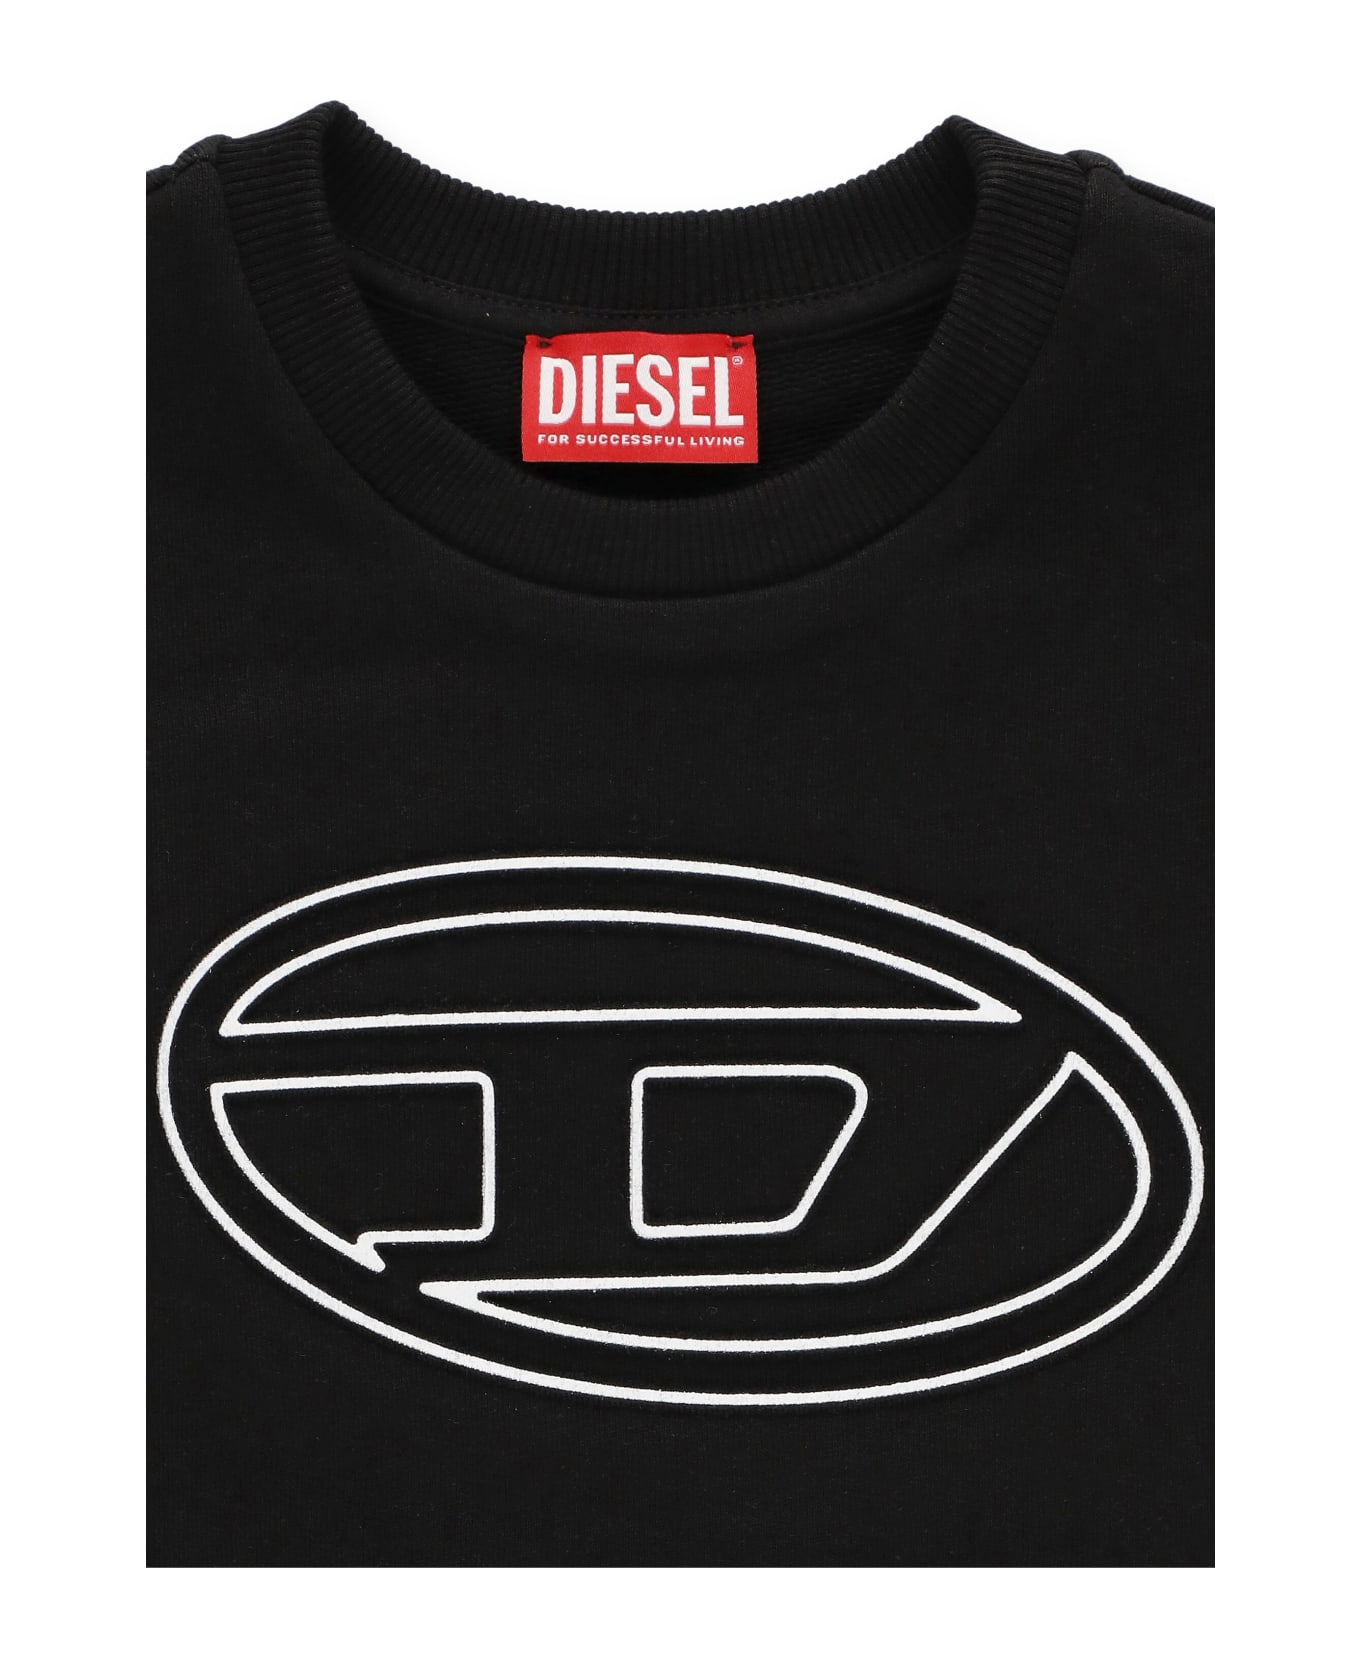 Diesel Smartbigoval Over Sweatshirt - Black